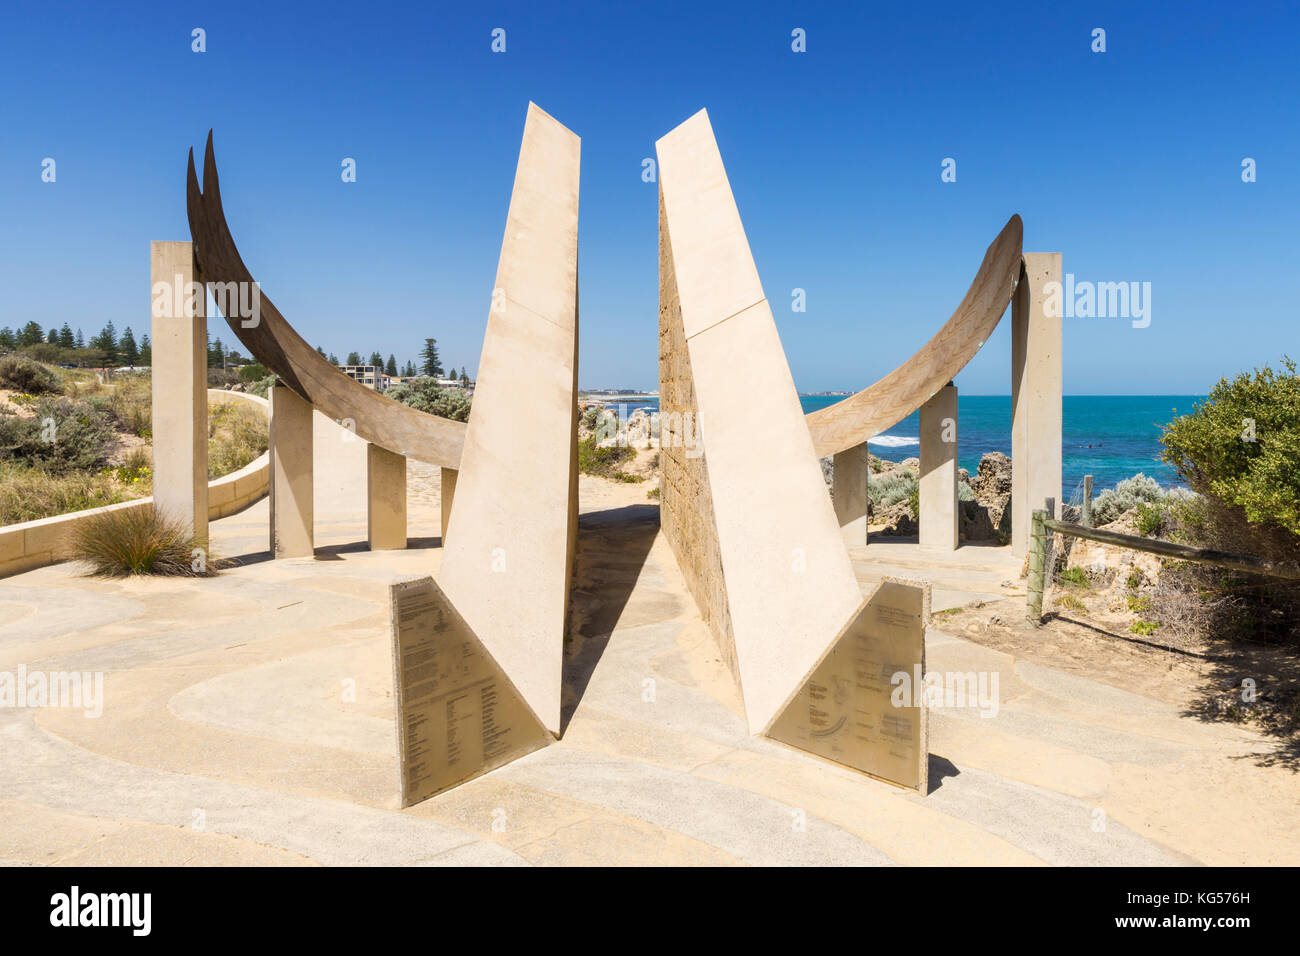 The Cottesloe sundial, Cottesloe beach, Western Australia Stock Photo